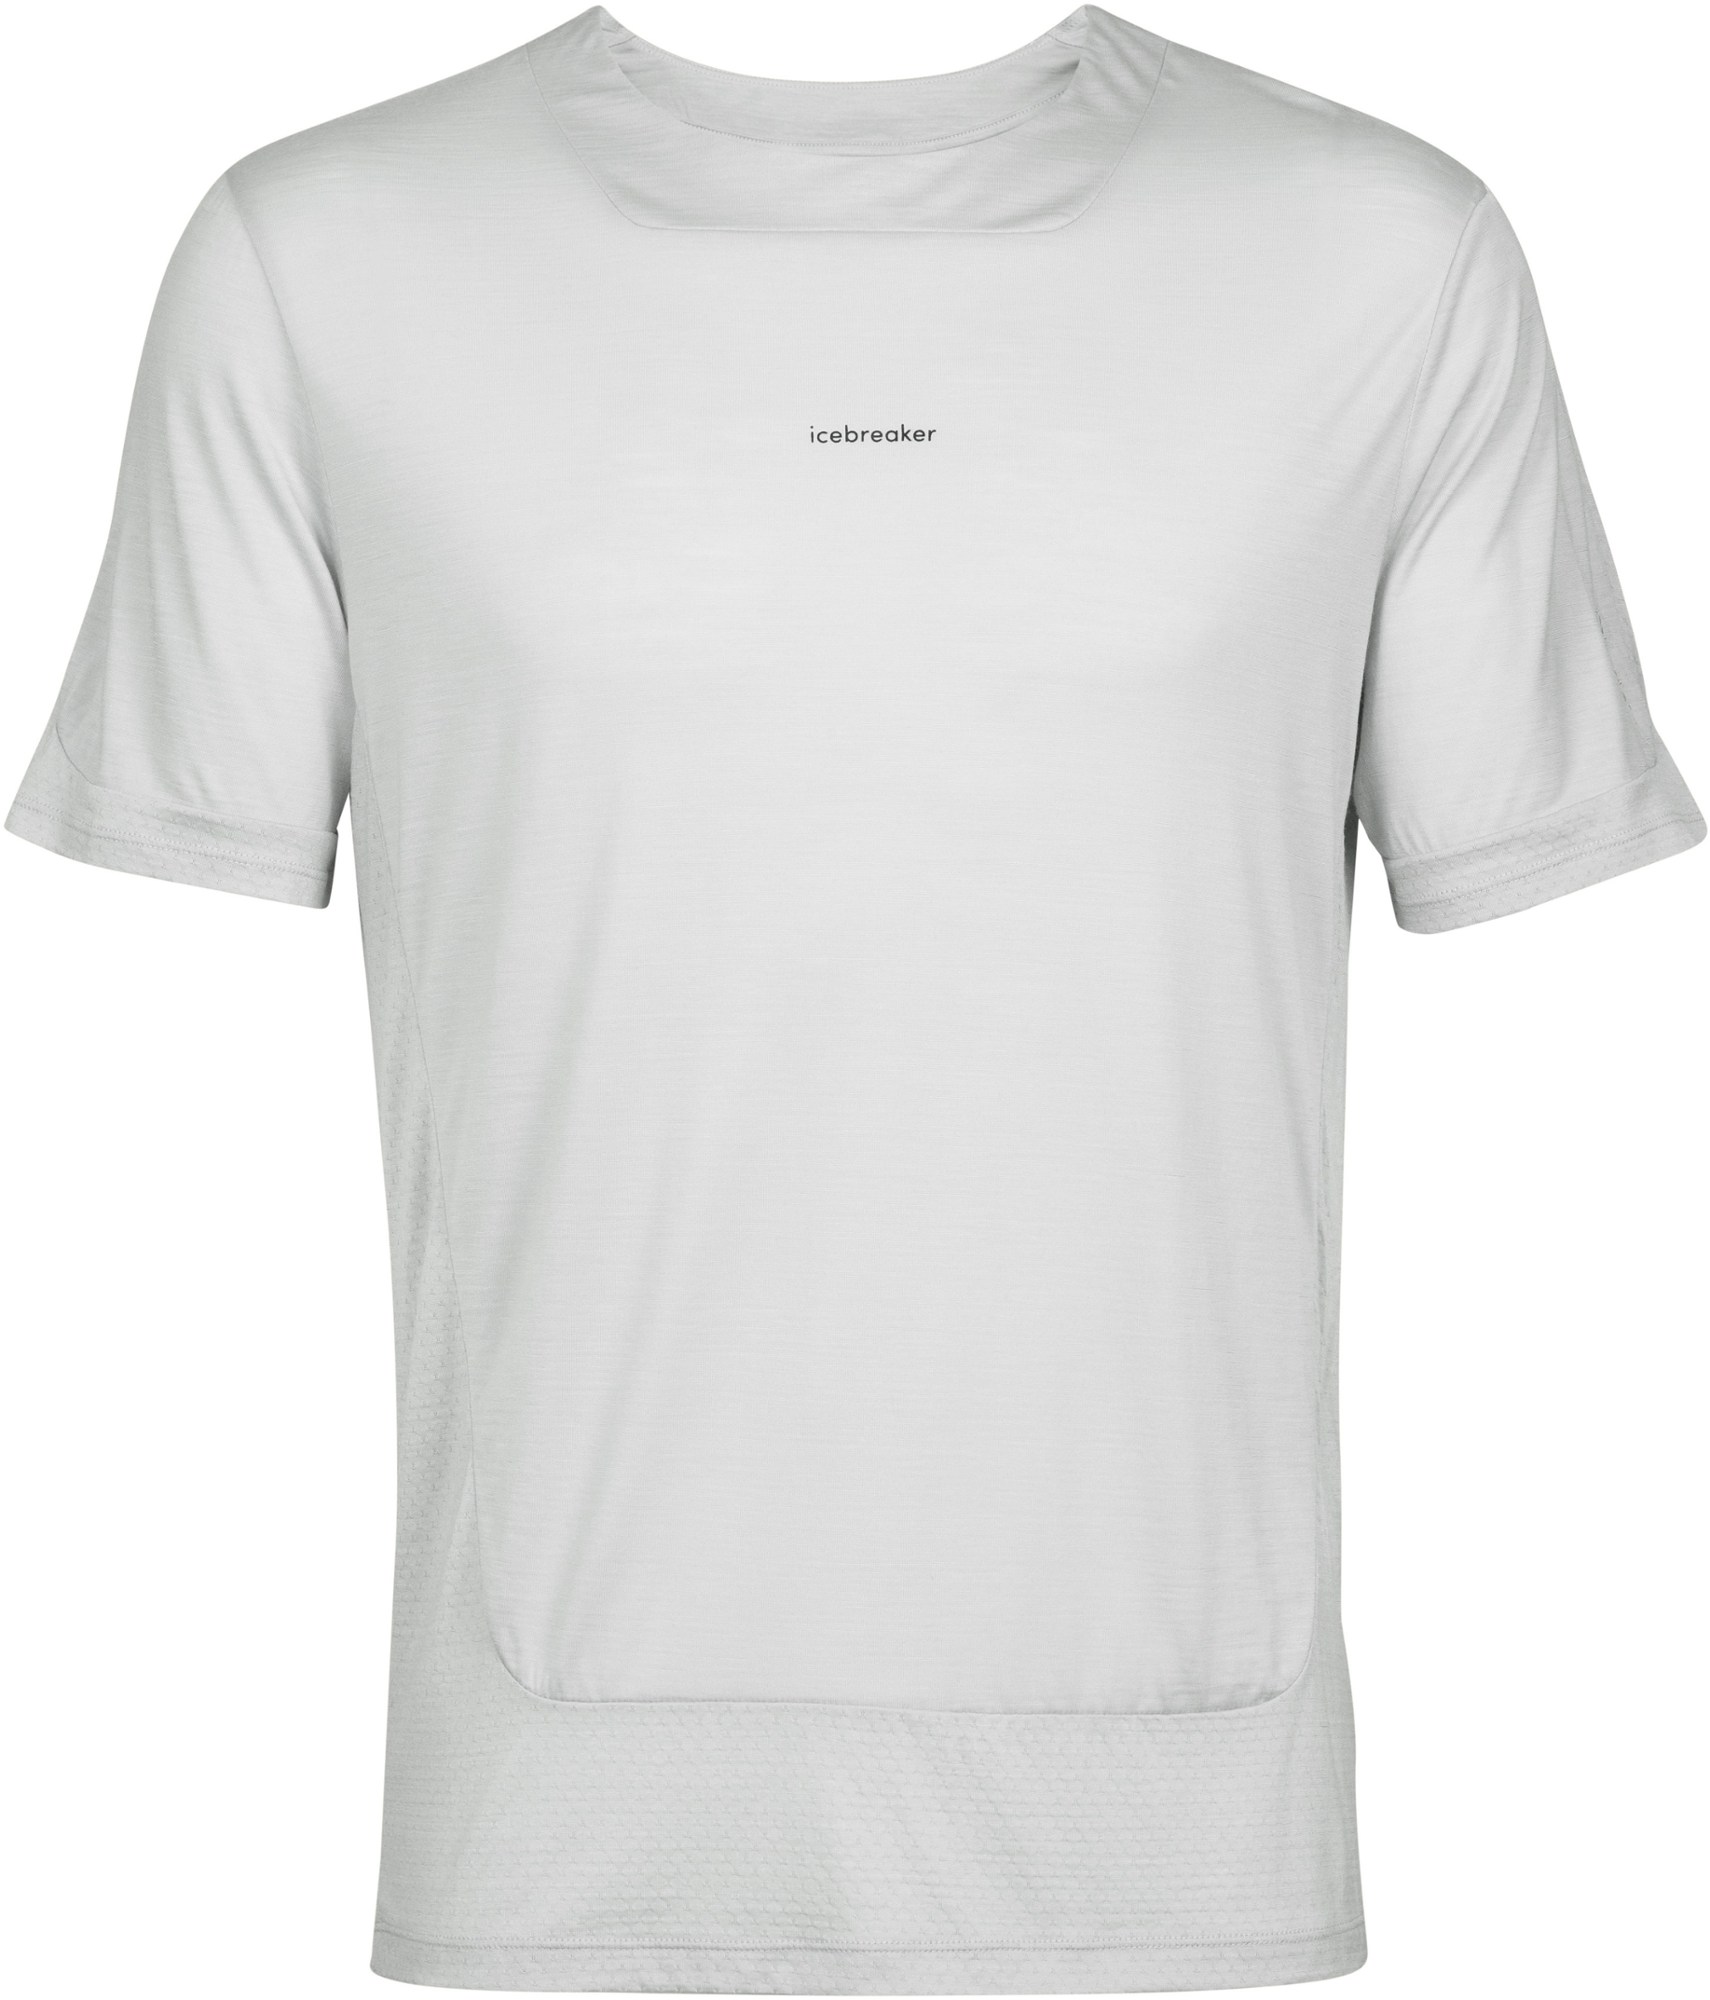 Футболка ZoneKnit Merino – мужская Icebreaker, серый футболка без рукавов icebreaker zoneknit cropped geodetic серый